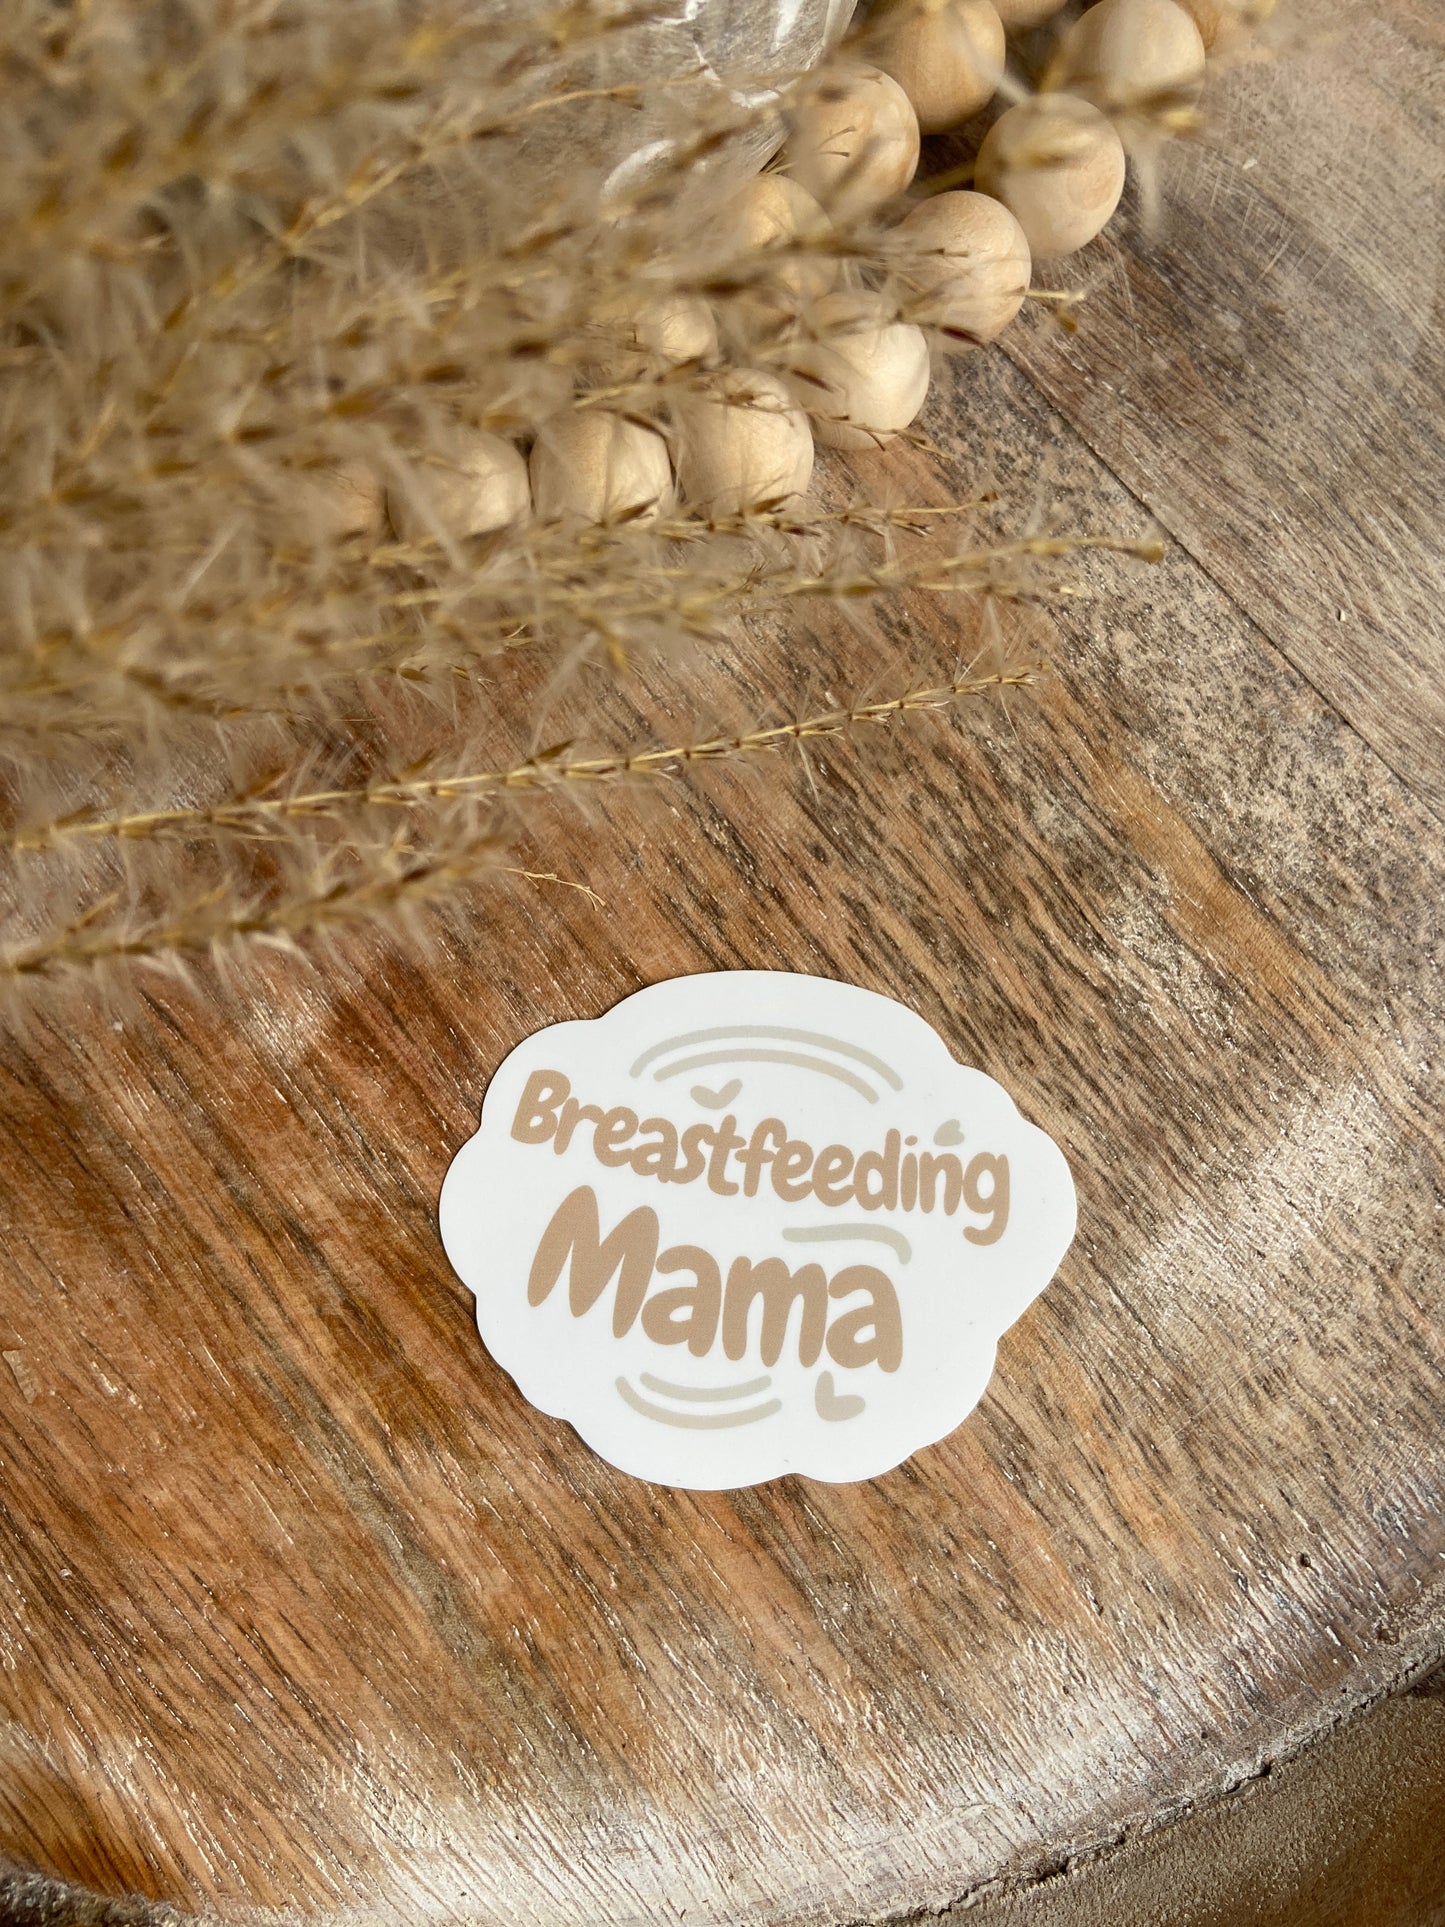 Breastfeeding Mama Sticker